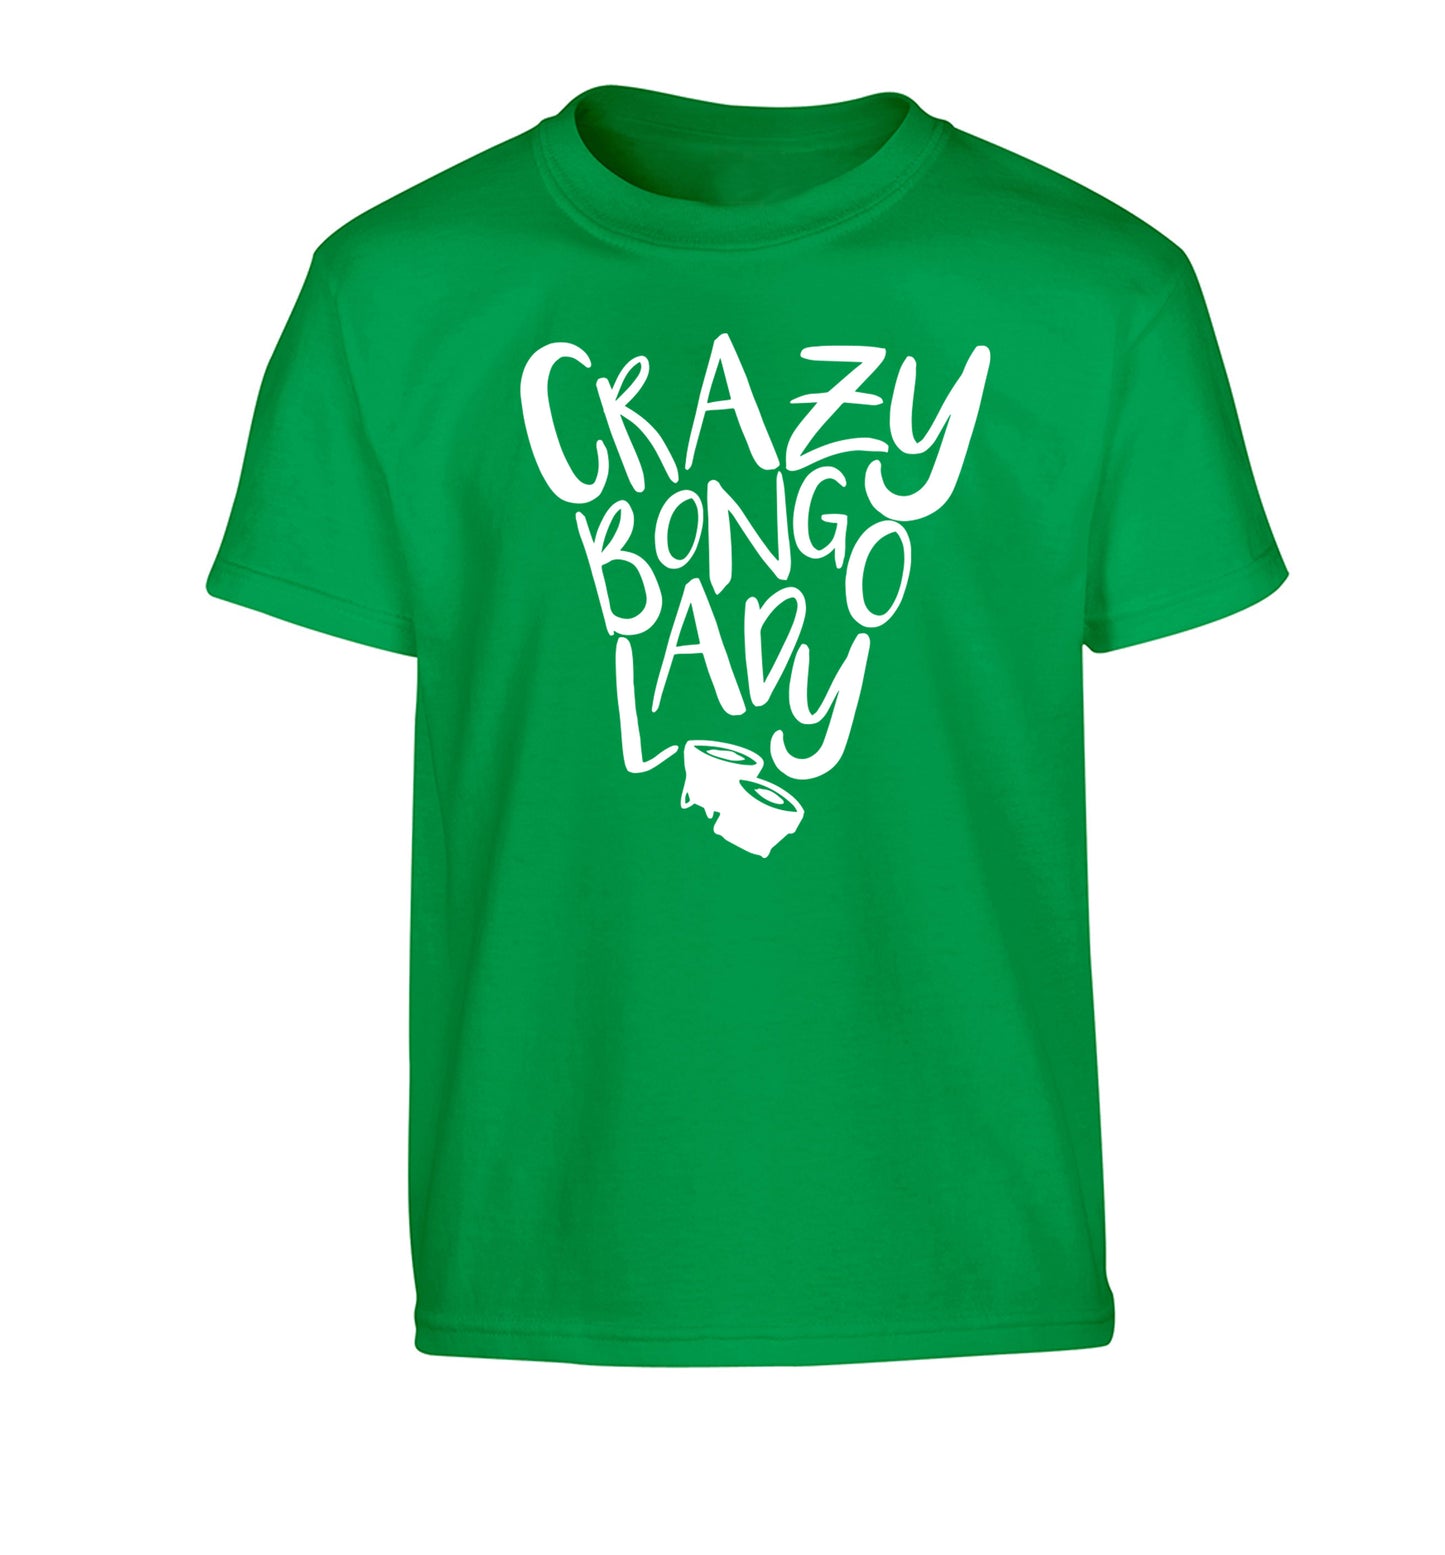 Crazy bongo lady Children's green Tshirt 12-14 Years